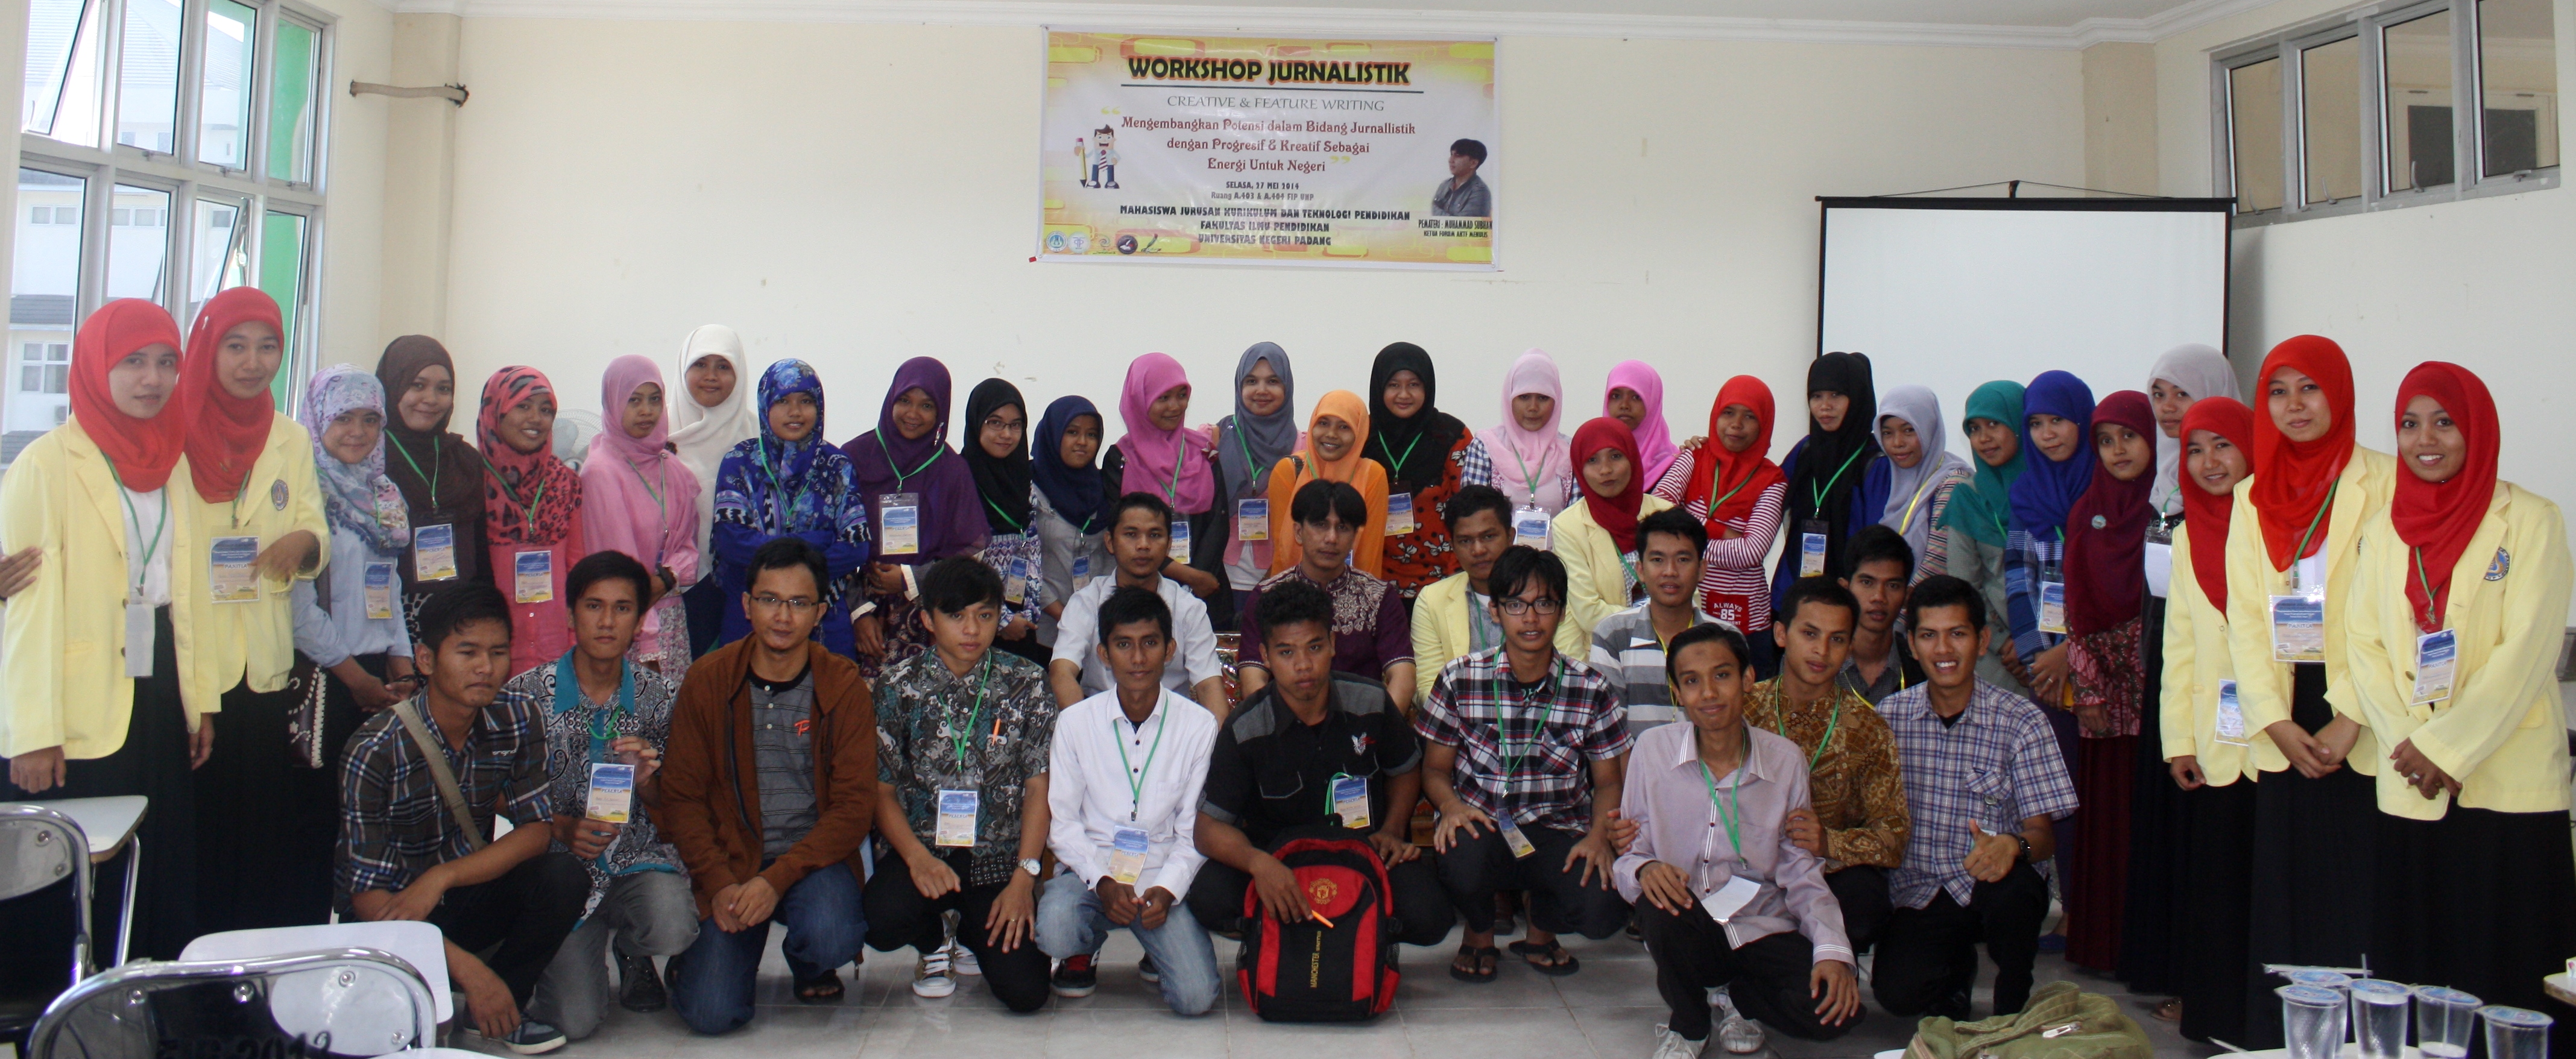 Sebanyak 40-an mahasiswa dari berbagai perguruan tinggi di kota Padang, Sumatera Barat, mengikuti Workshop Jurnalistik, Selasa (27/5). Acara itu ditaja oleh mahasiswa jurusan Kurikulum dan Teknologi Pendidikan Fakultas Ilmu Pendidikan Universitas Negeri Padang (UNP).